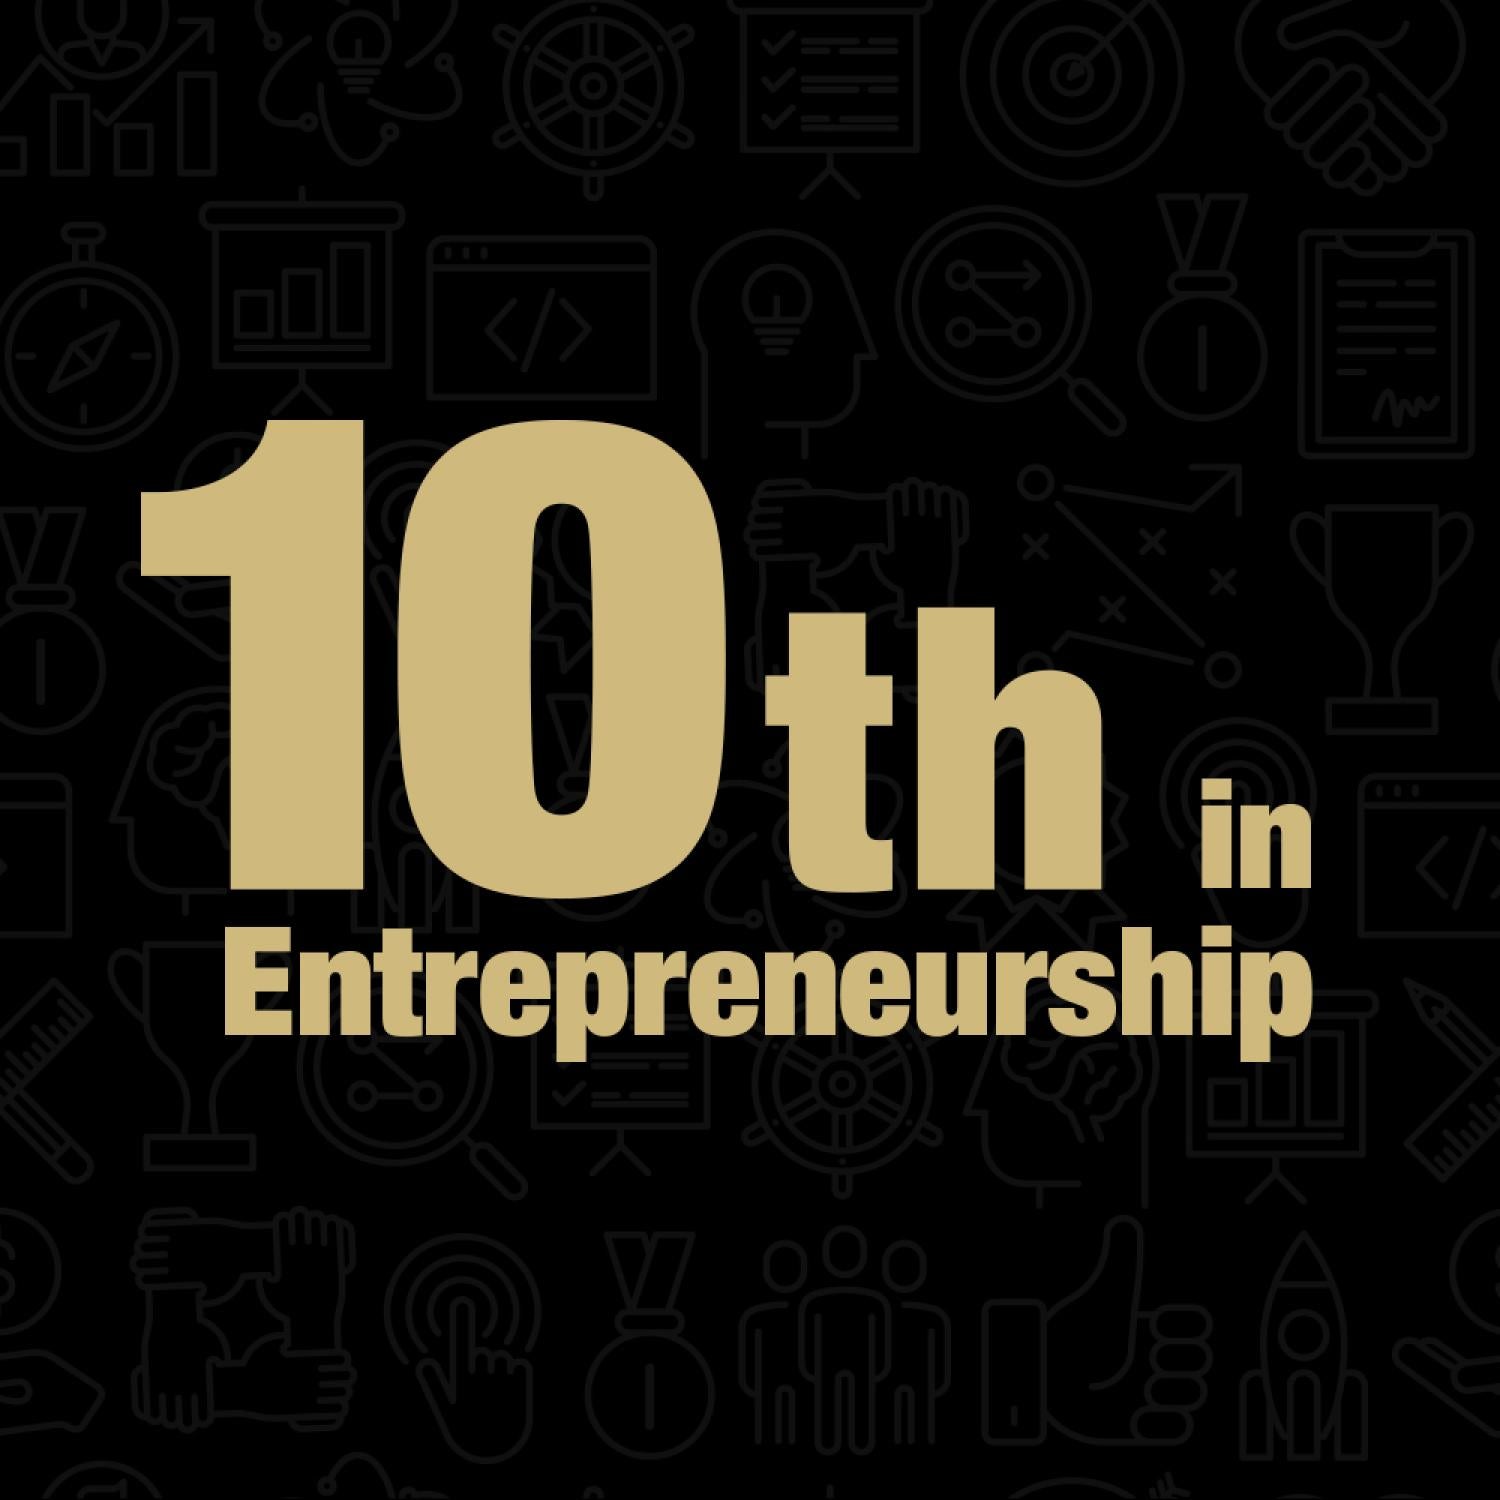 Leeds School of Business ranked 10th in Entrepreneurship